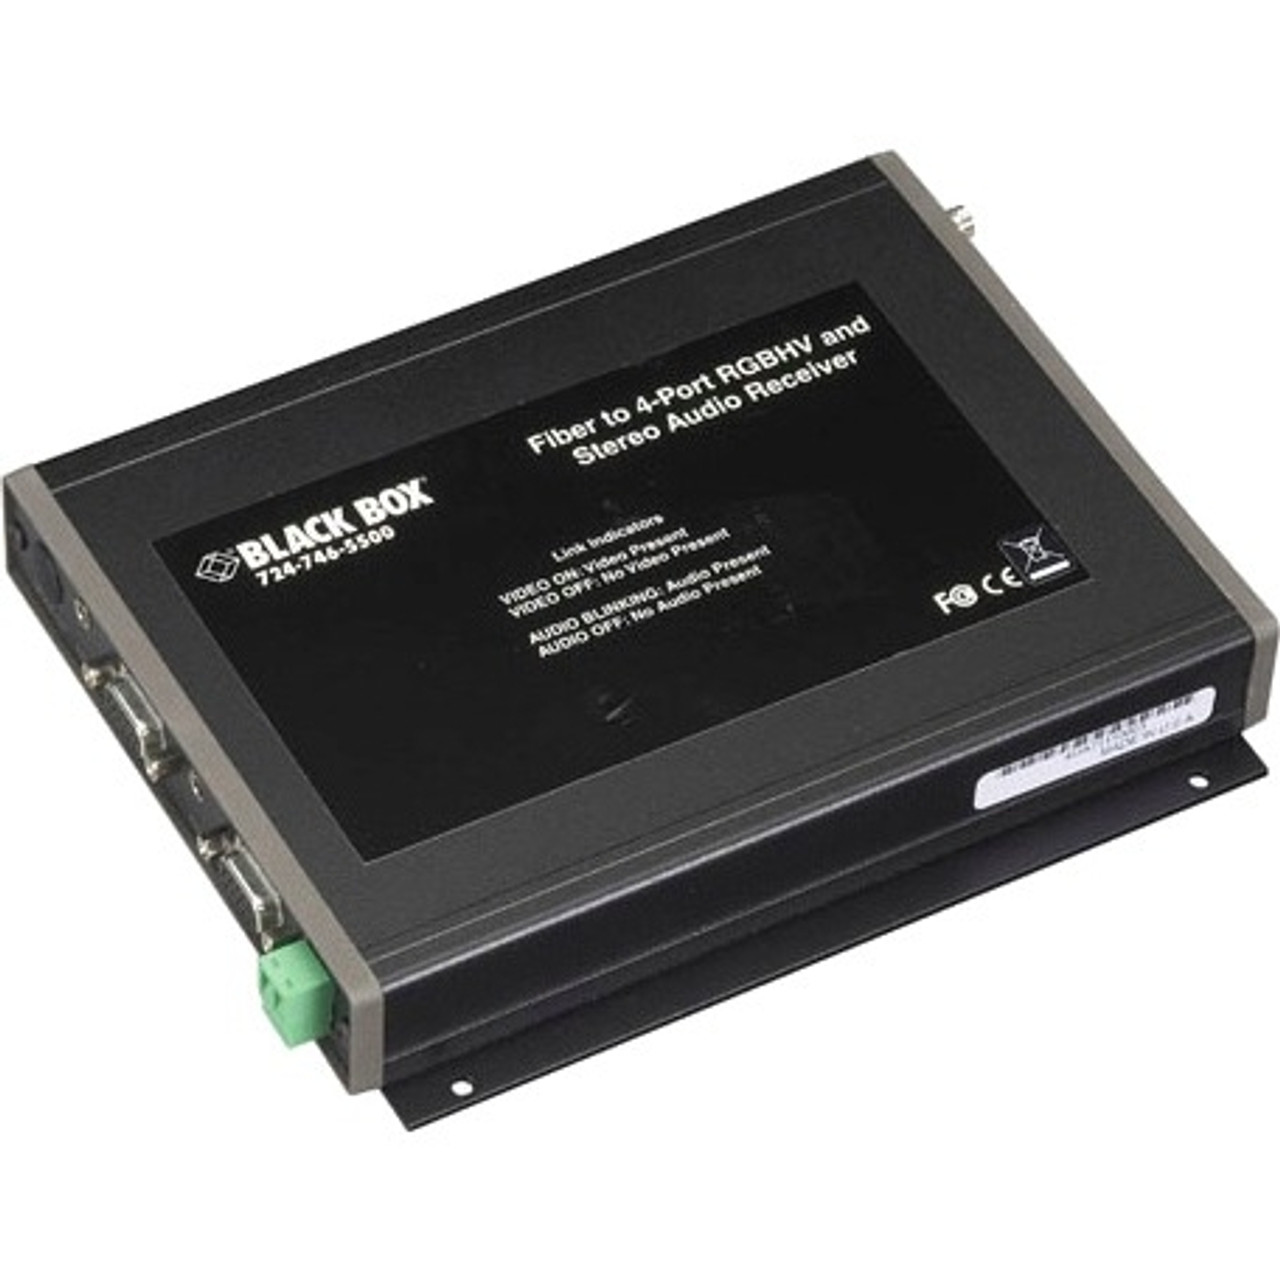 AC1023A Black Box RGBHV/Stereo-Audio Fiber Extender Receivers (1) ST Optical Inp